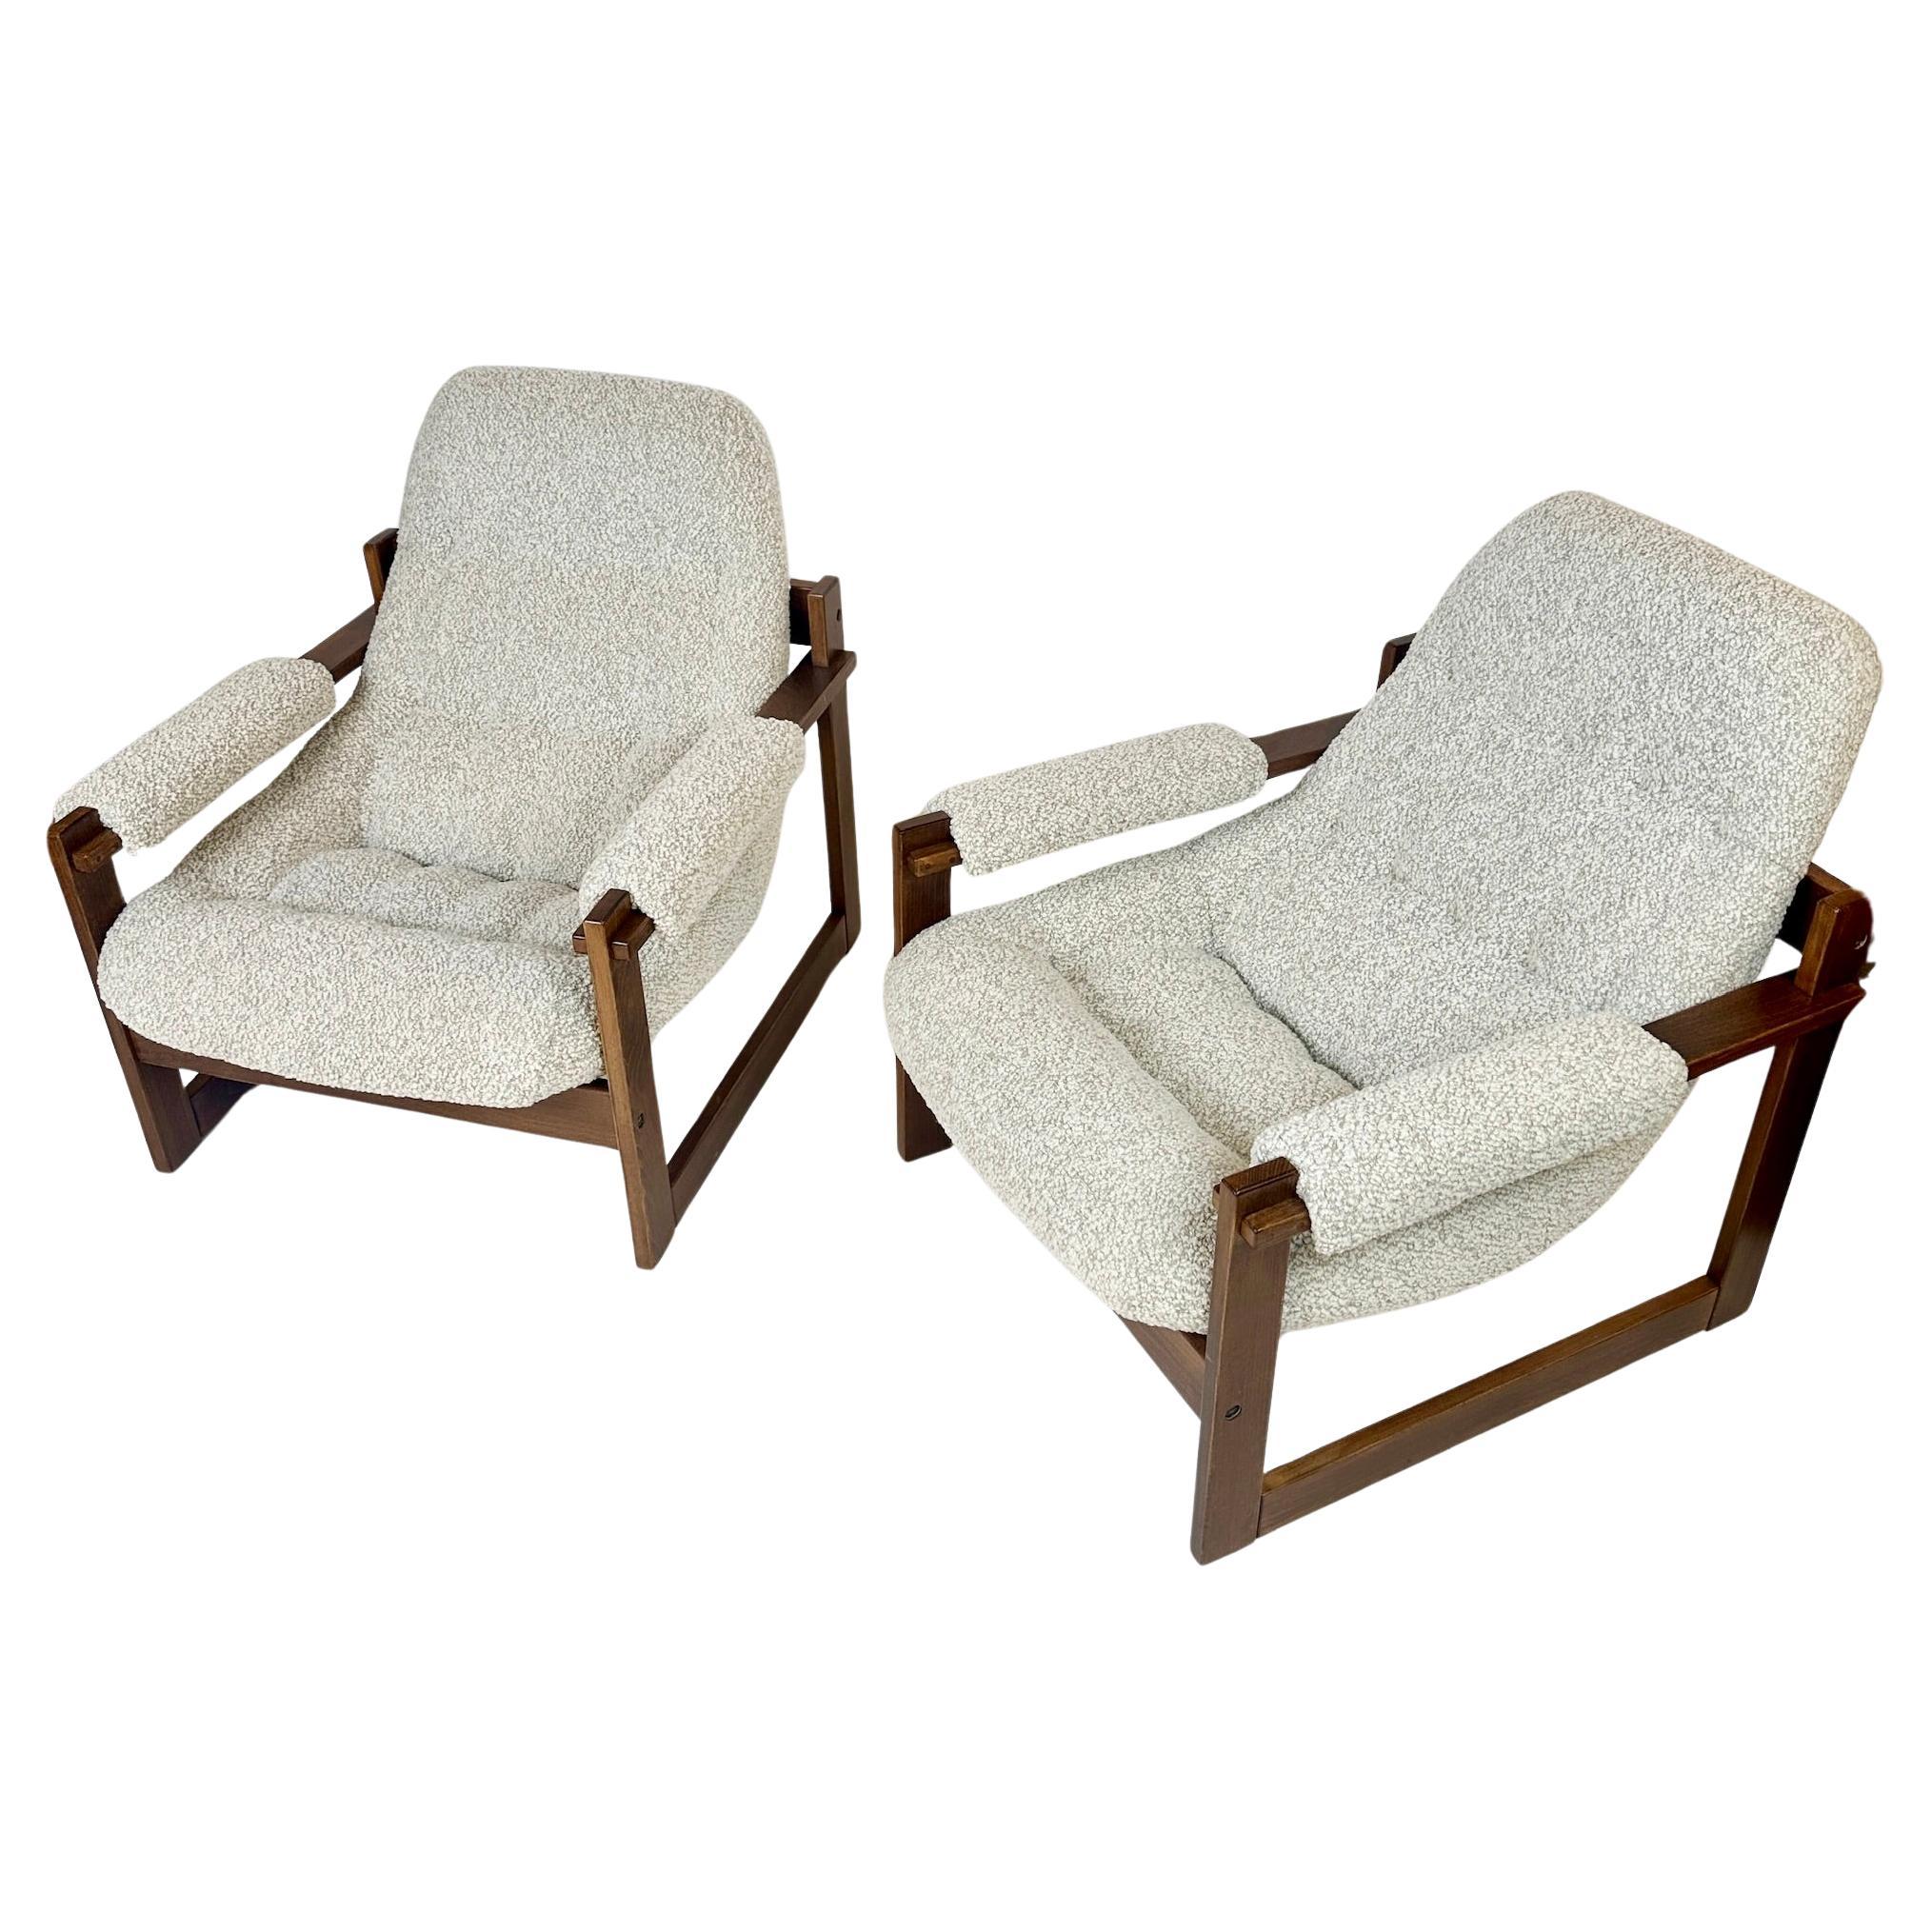 Pair of Brazilian Wood & Beige Wool Bouclè MP-163 Earth Chairs by Percival Lafer